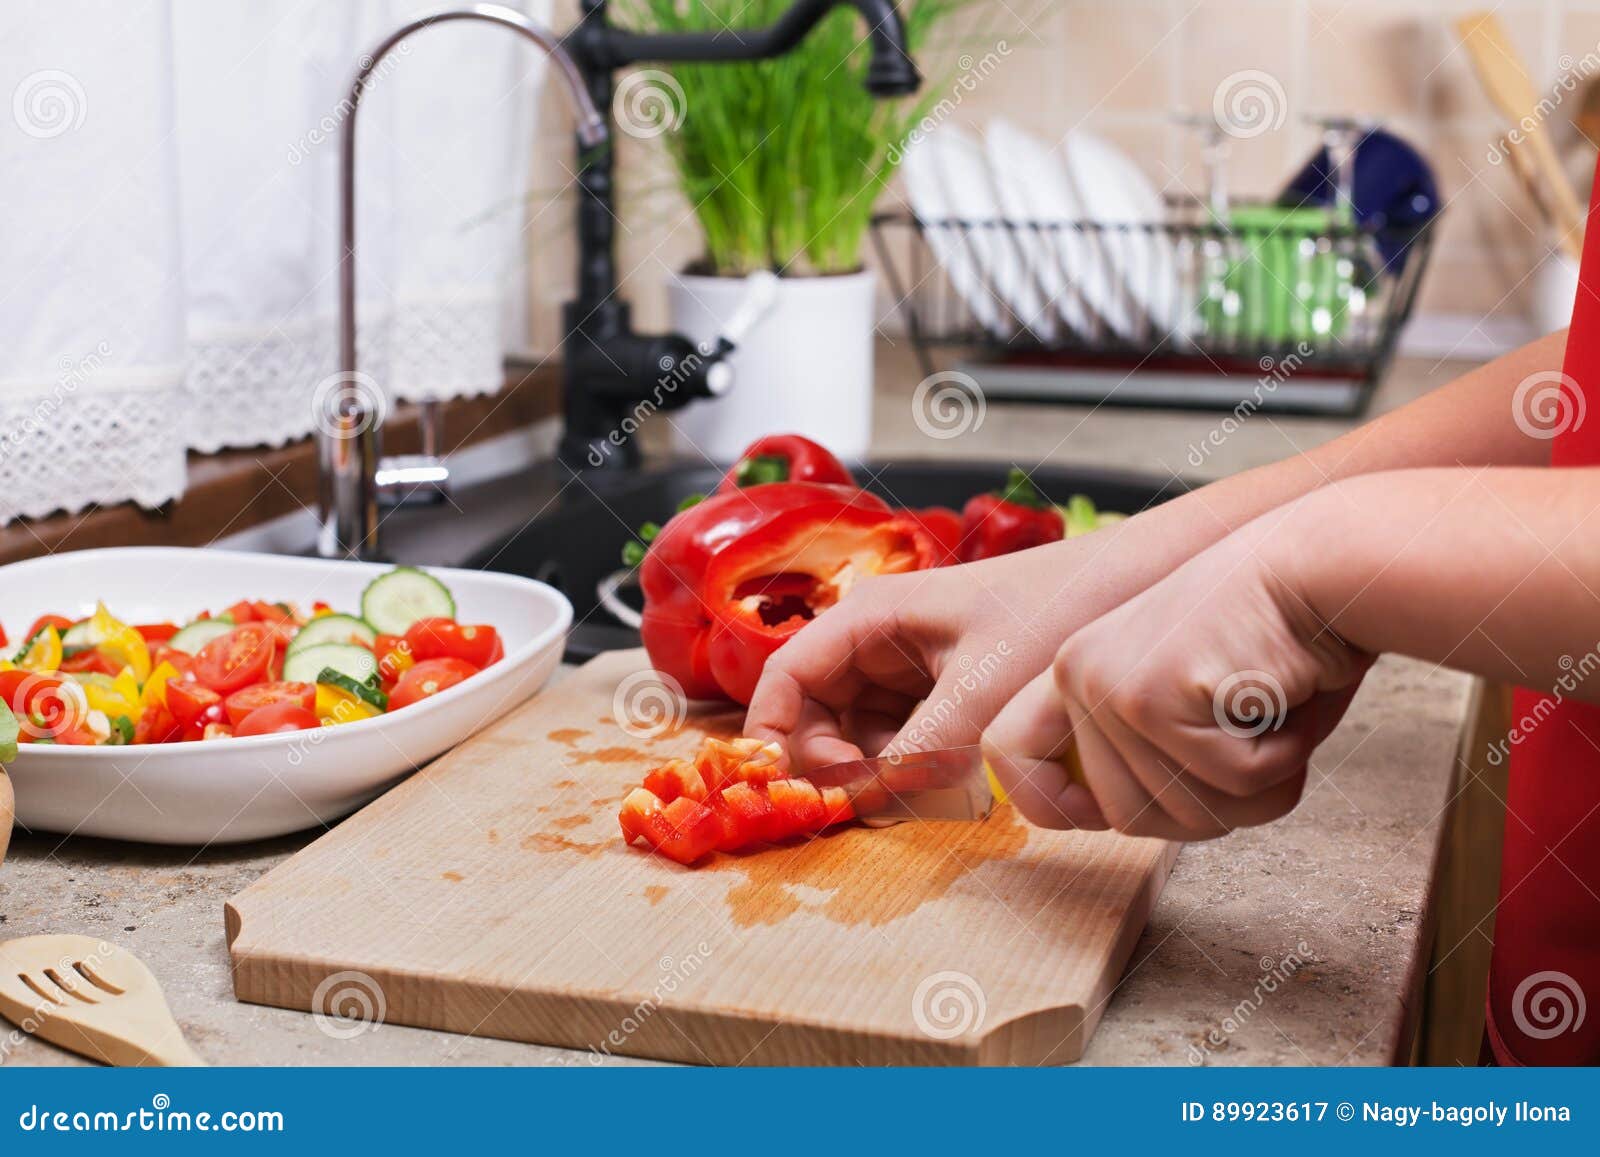 child hands chopping a red bellpepper for a fresh vegetables sal